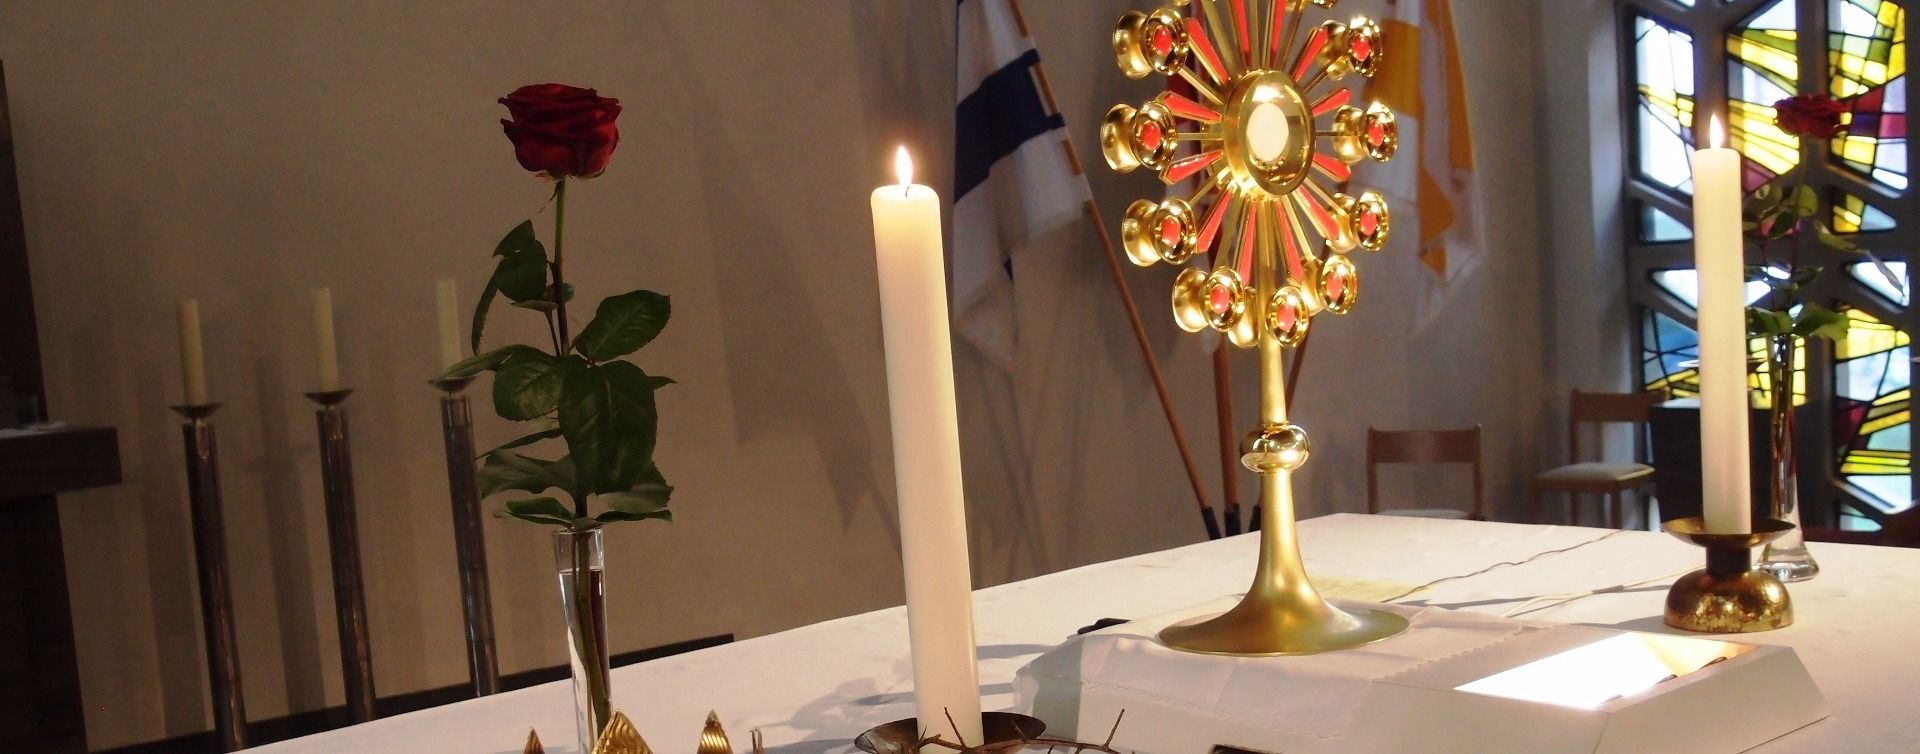 24-Stunden-Gebet in Hanau. Foto: Archiv, St. Elisabeth Hanau  